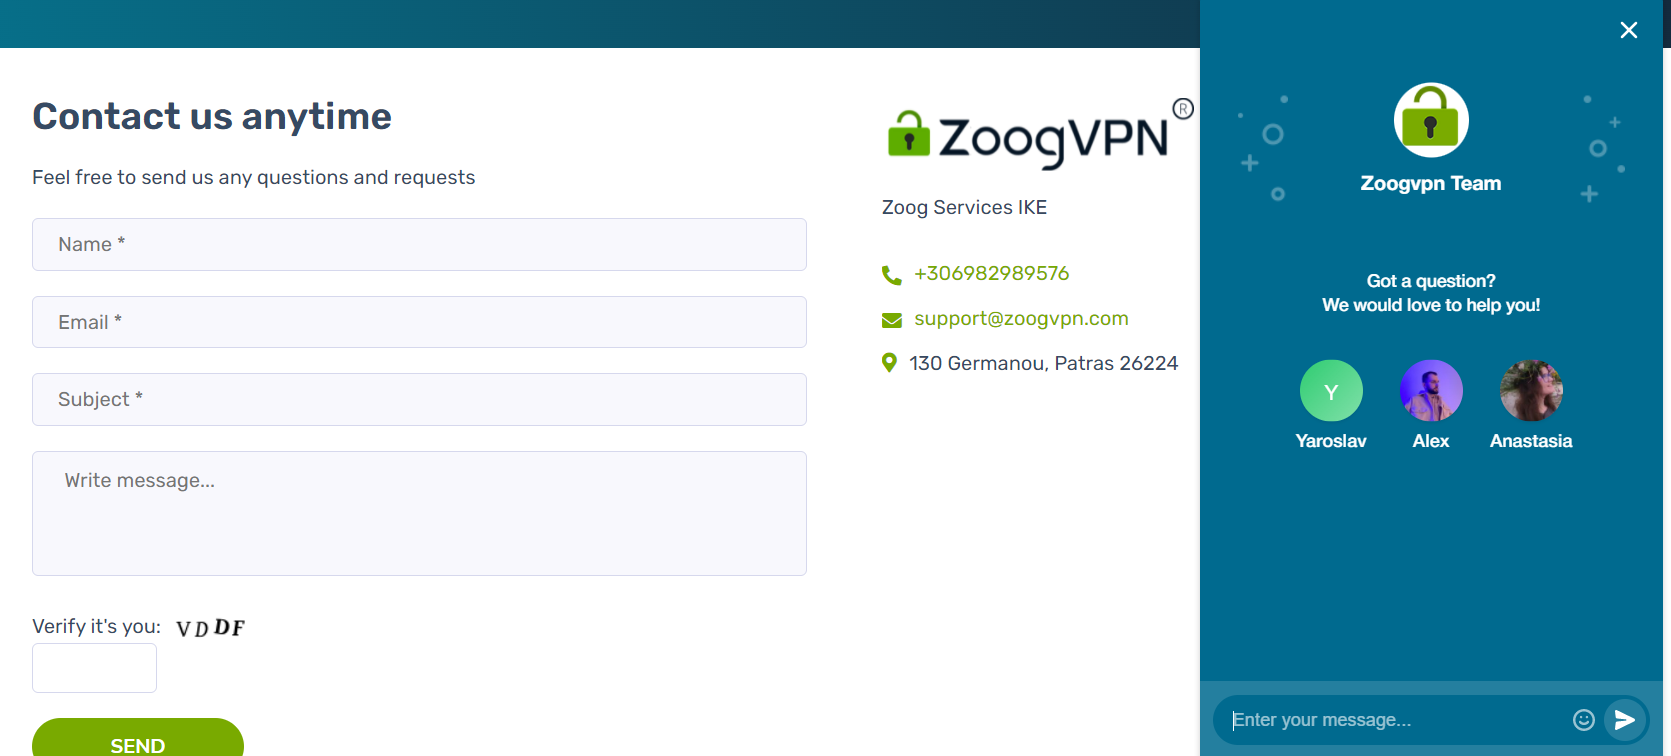 zoog-vpn-live-chat-support